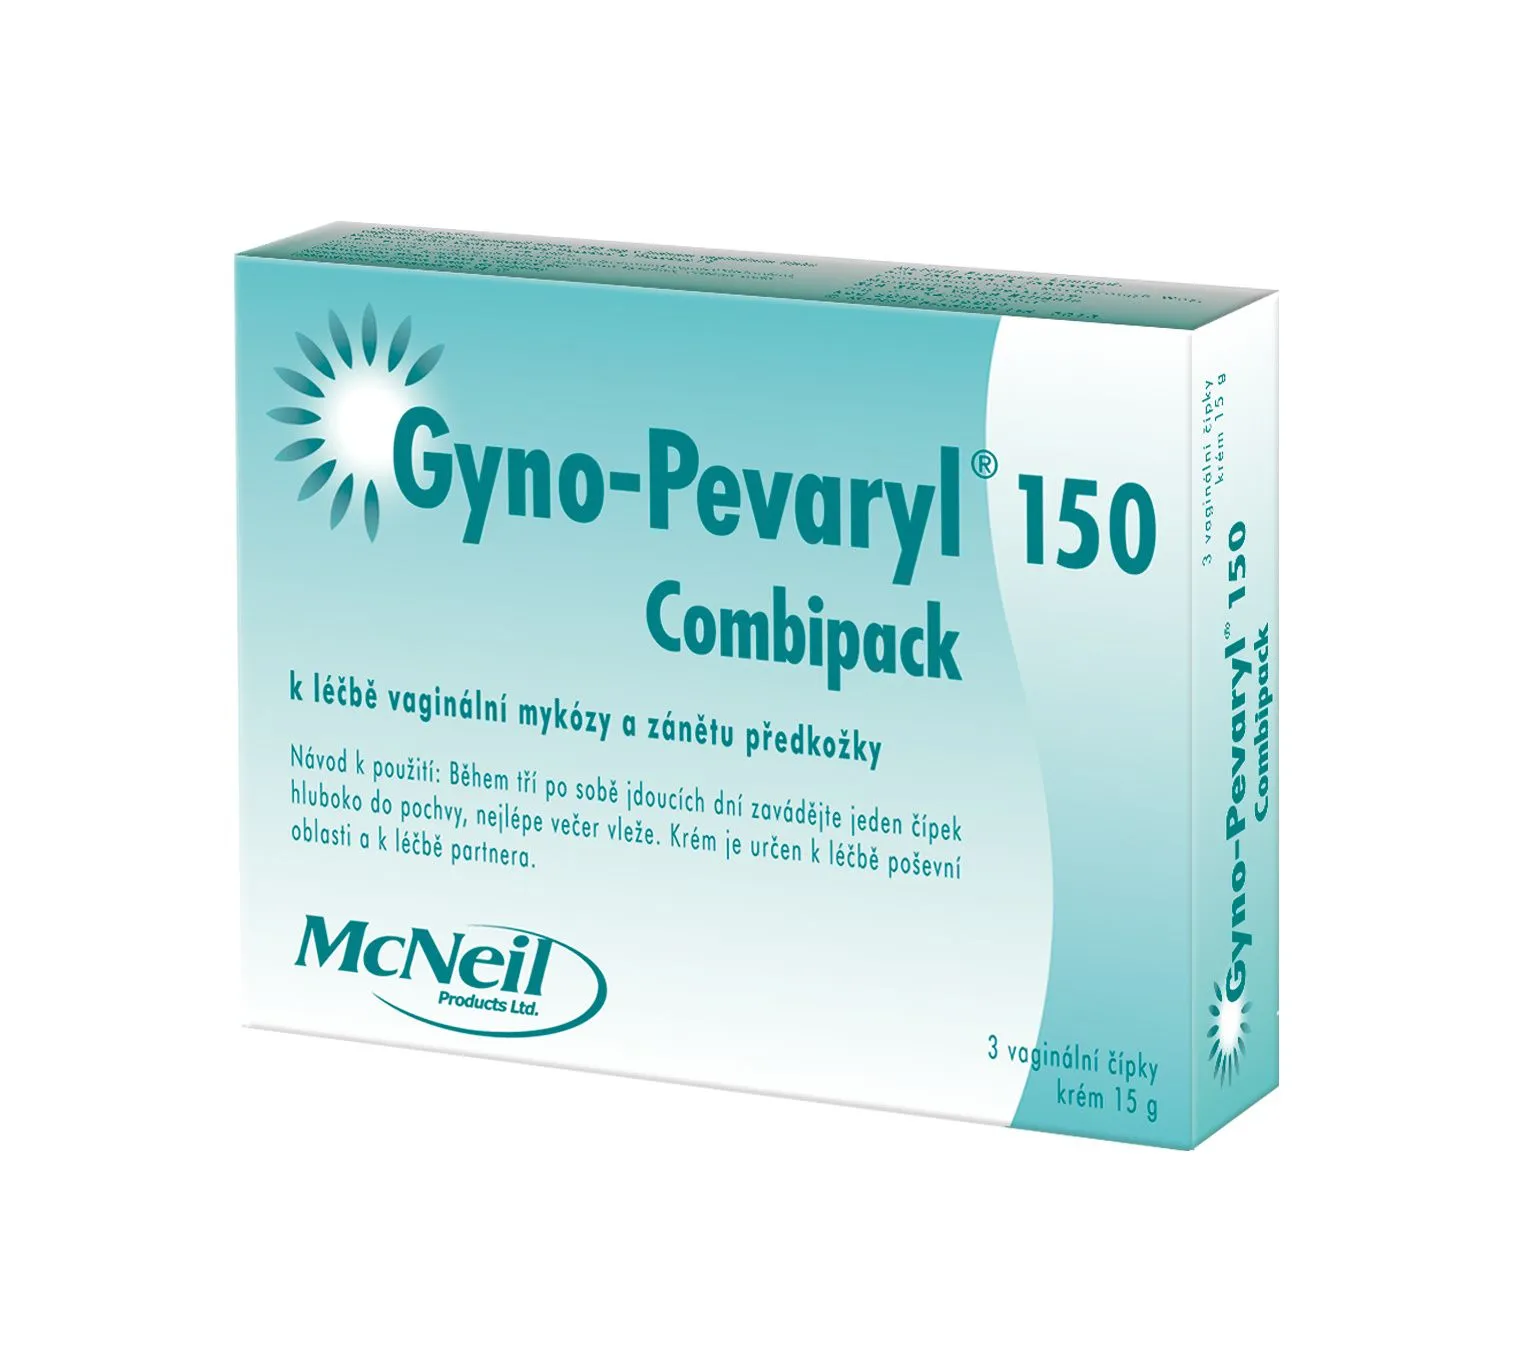 Gyno-pevaryl Combipack 3 vaginální čípky a krém 15g